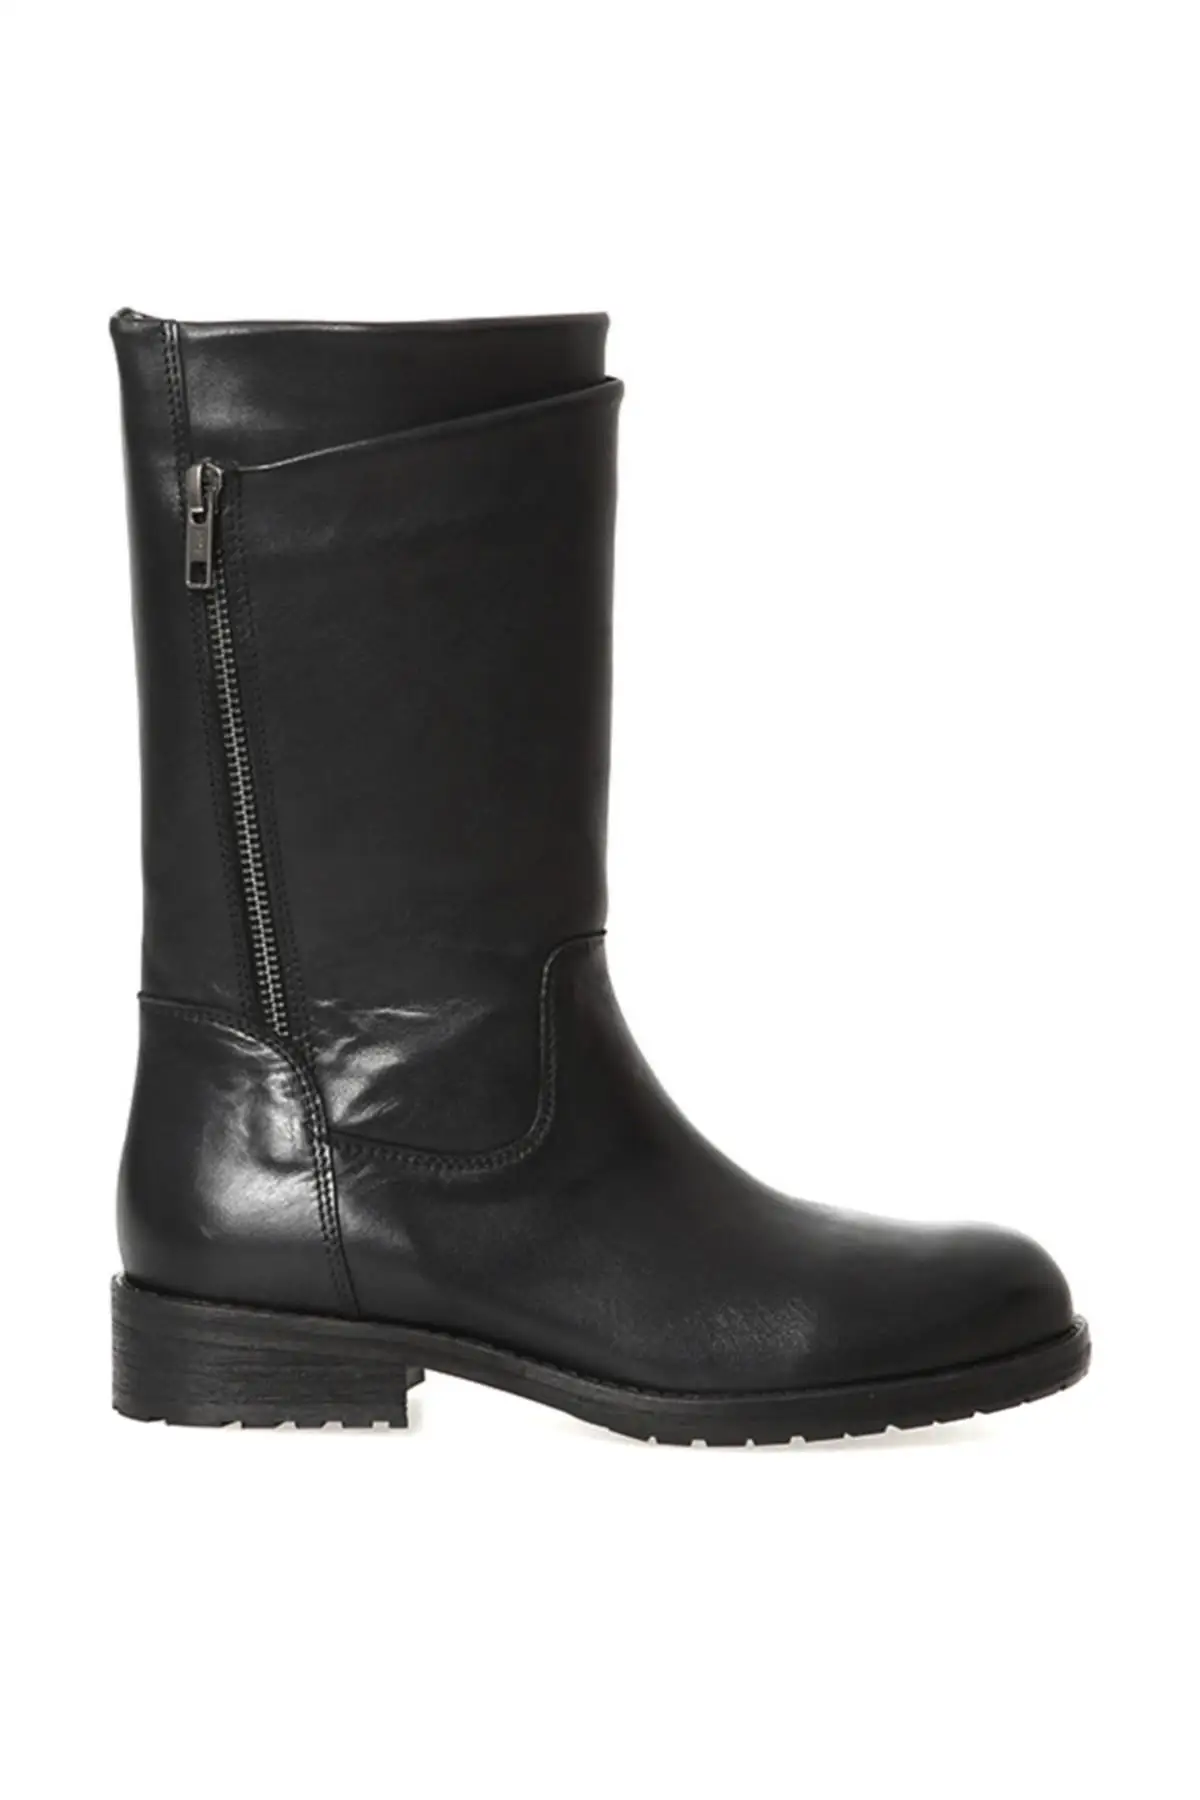 Derimod Genuine Leather Black Women 'S Boots| | - AliExpress